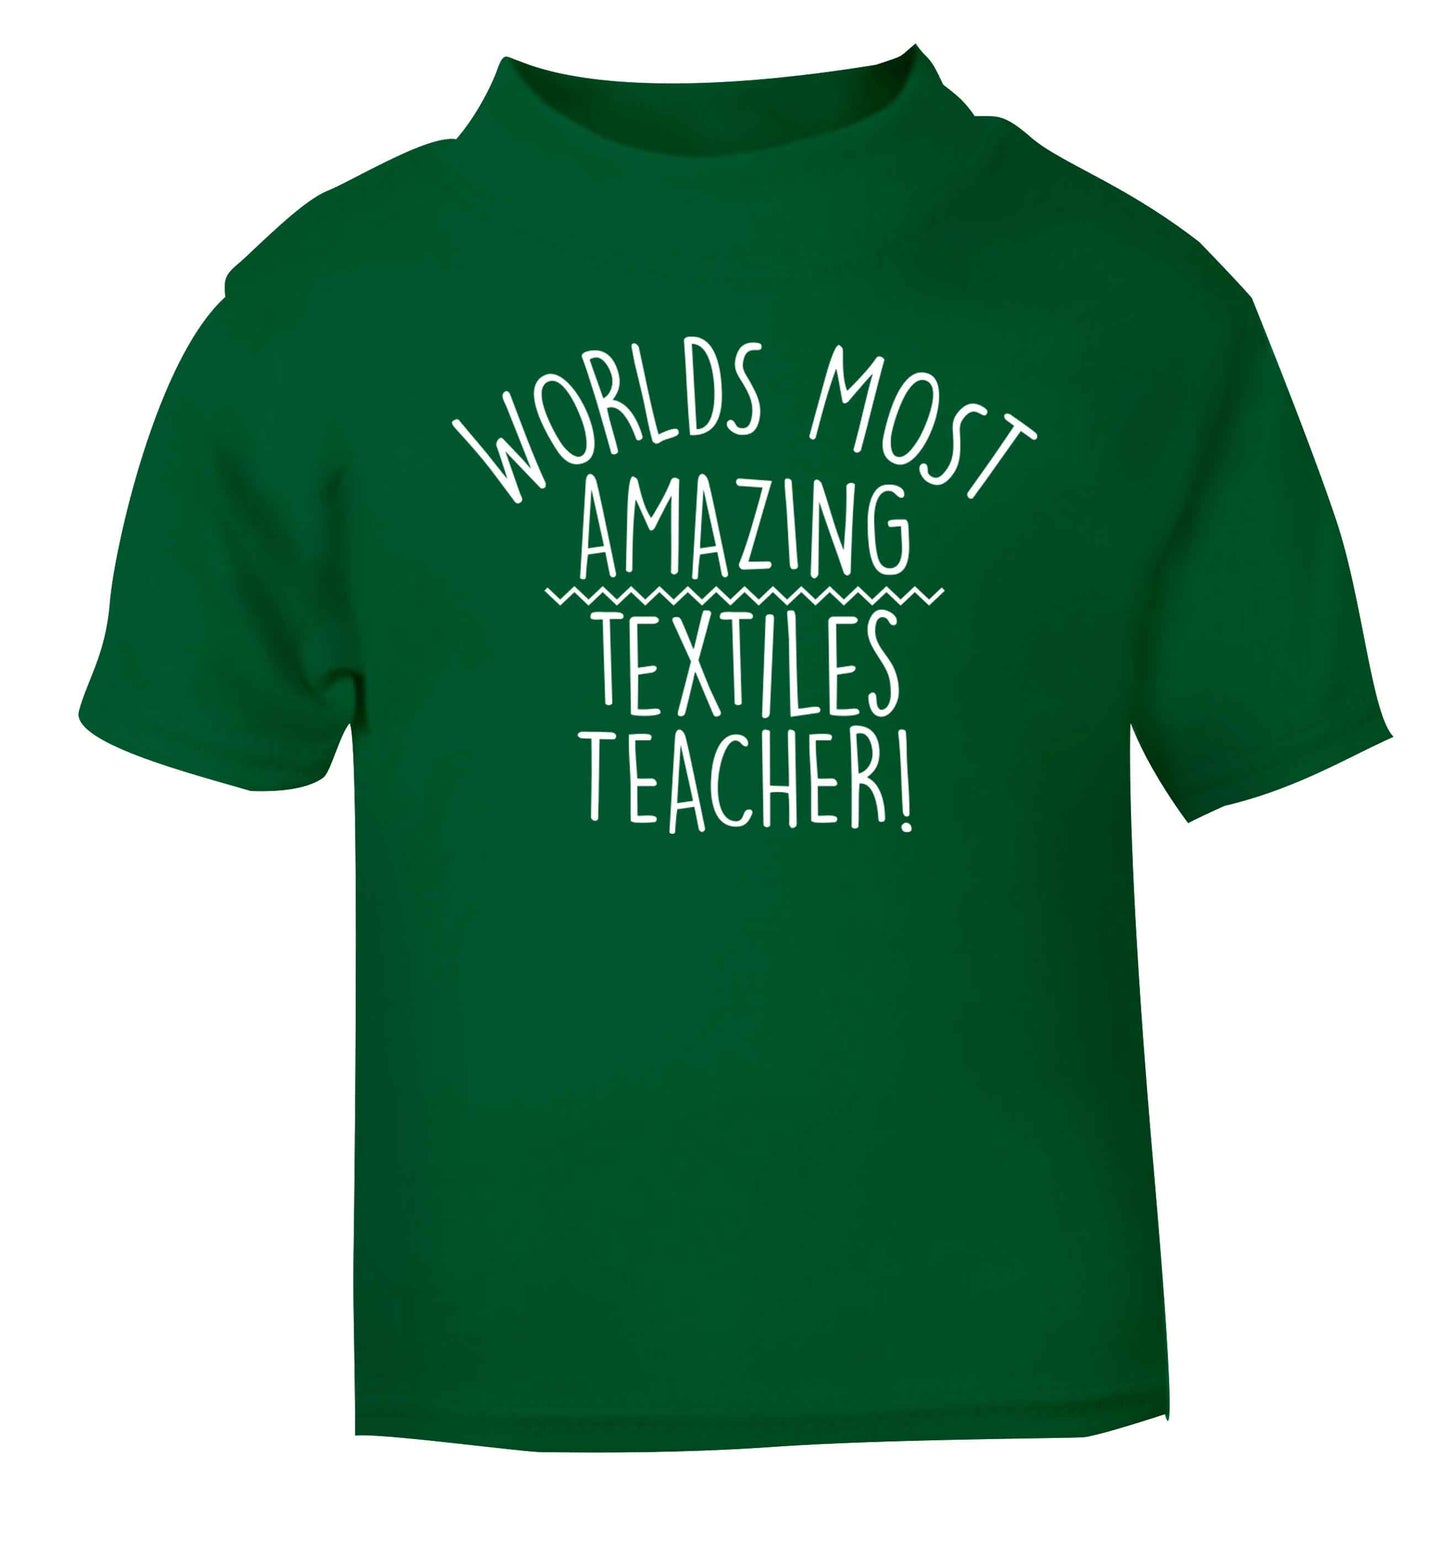 Worlds most amazing textiles teacher green baby toddler Tshirt 2 Years